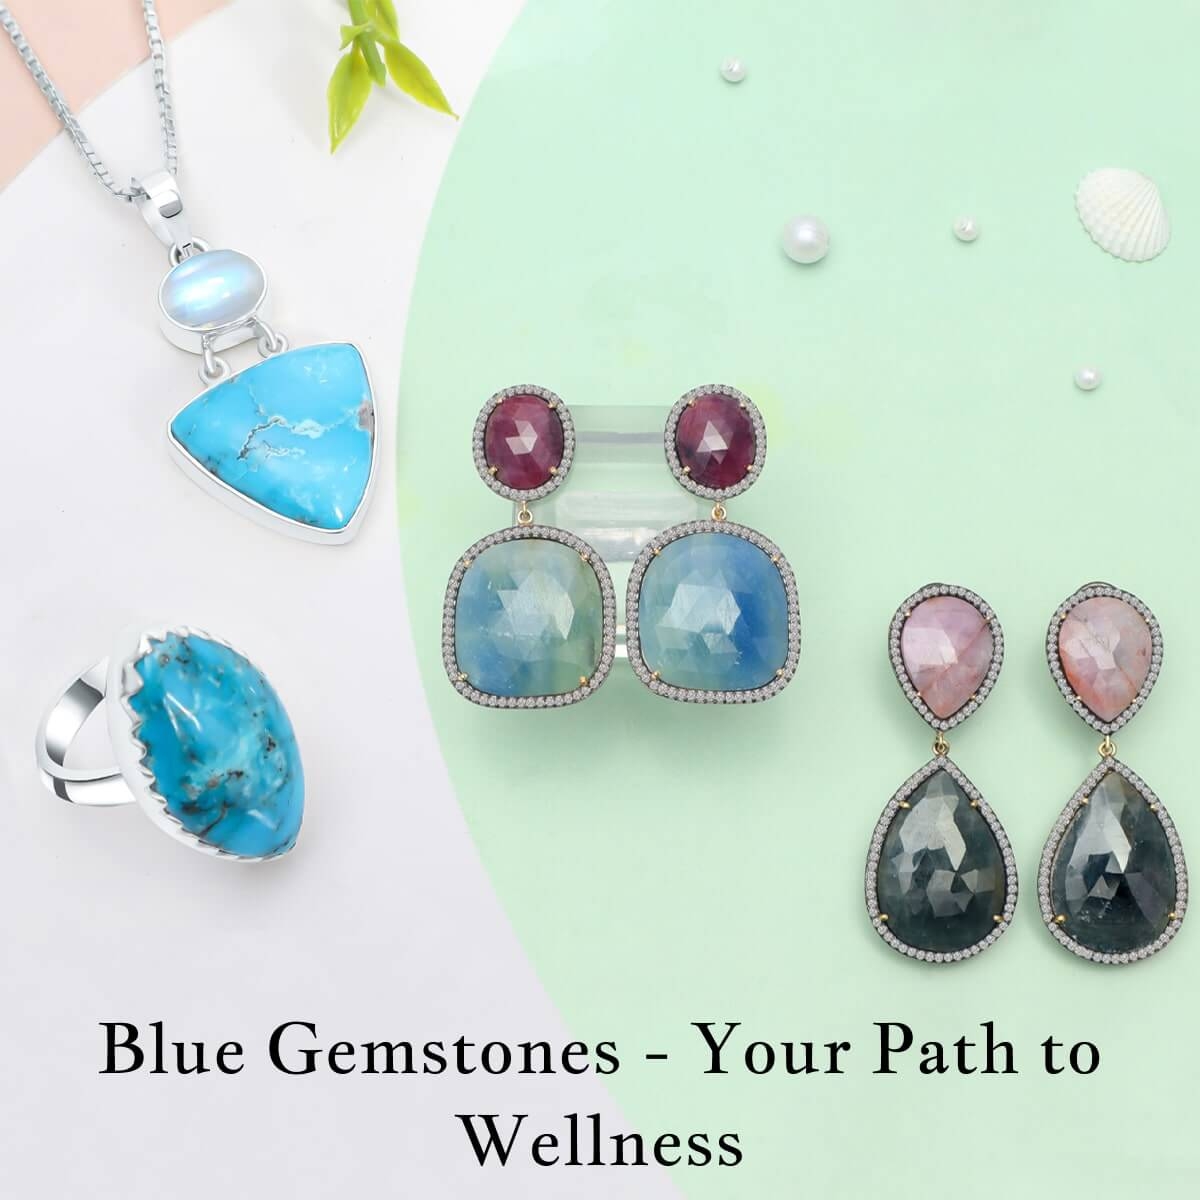 Blue Gemstones Interesting Facts